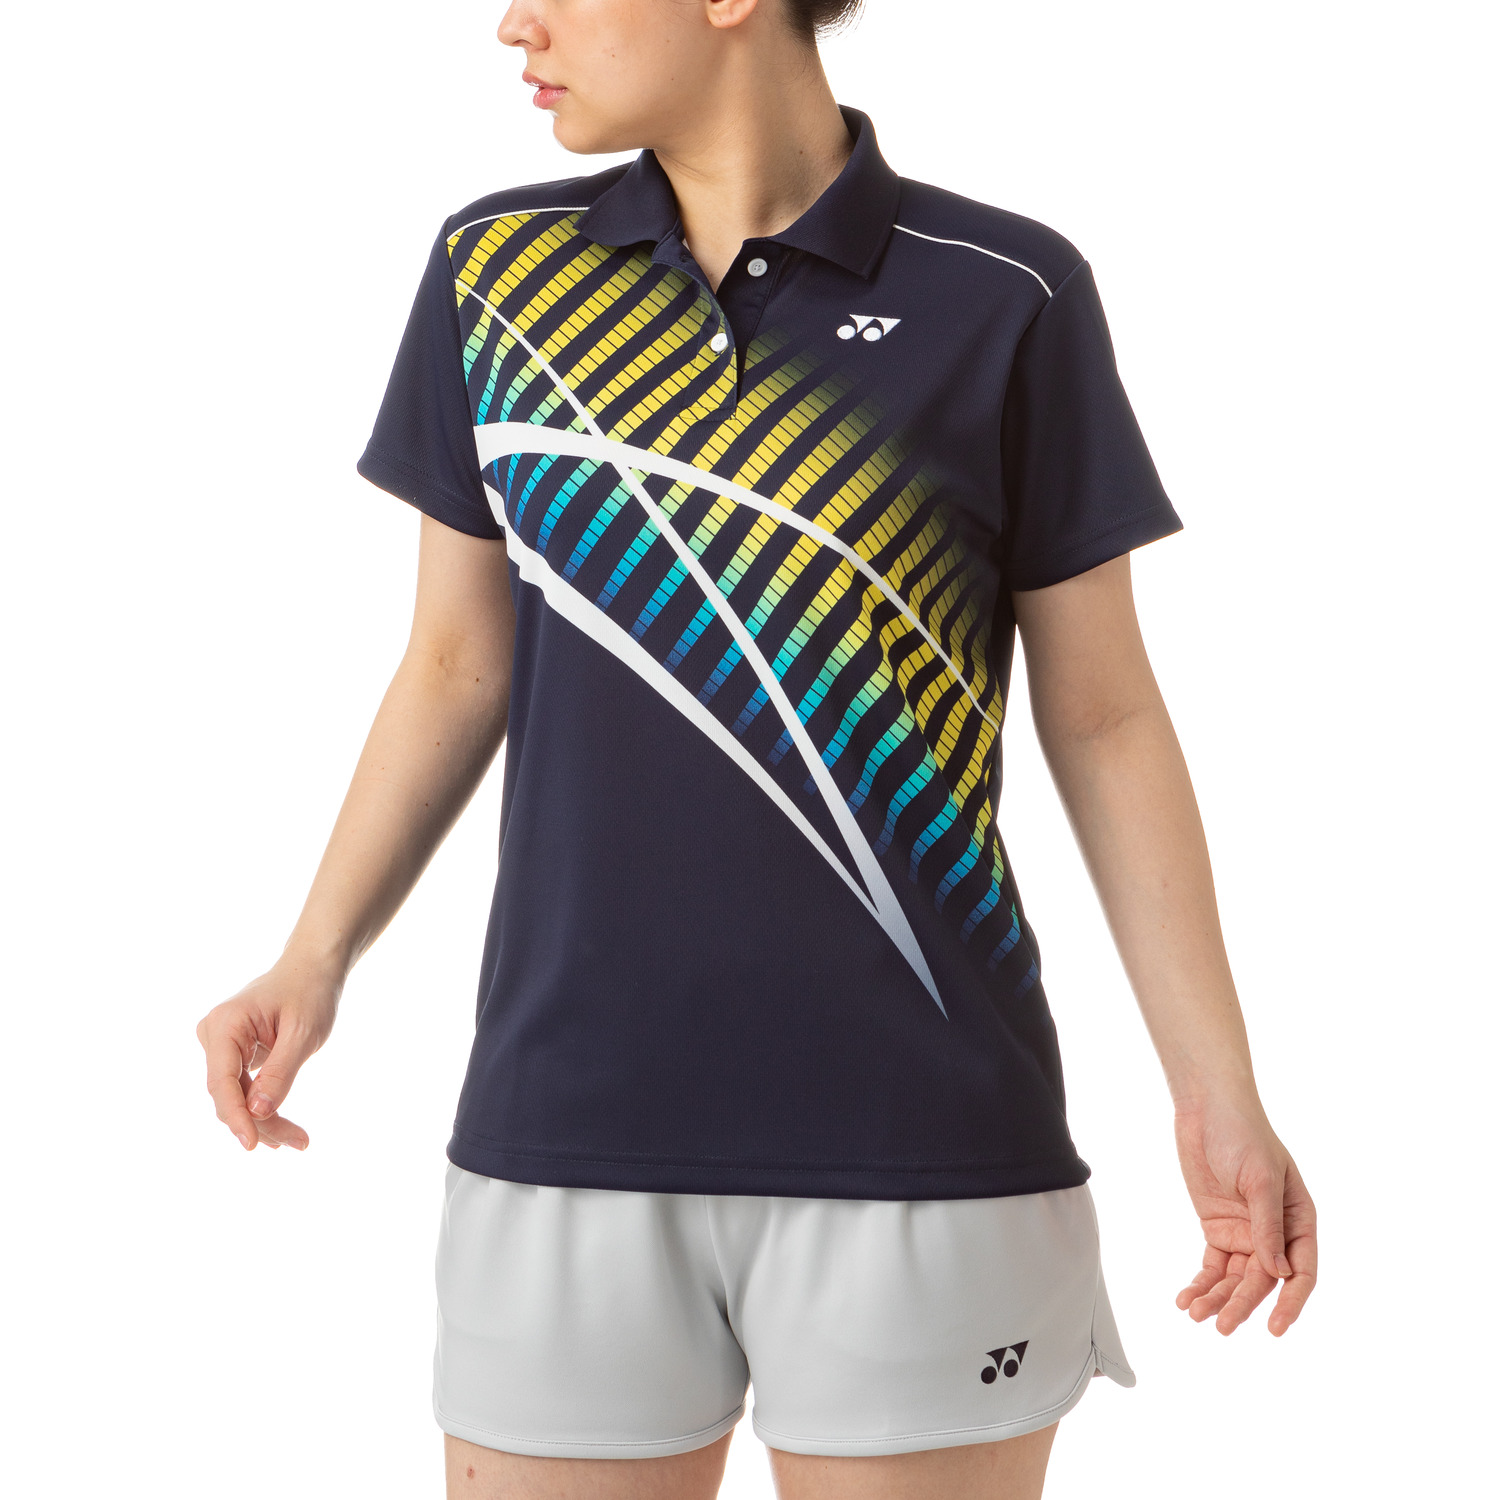 YONEX ヨネックス ゲームシャツ サイズWS1 20626 テニスウェア bHkGKuVSi4, ウエア - adcmed.com